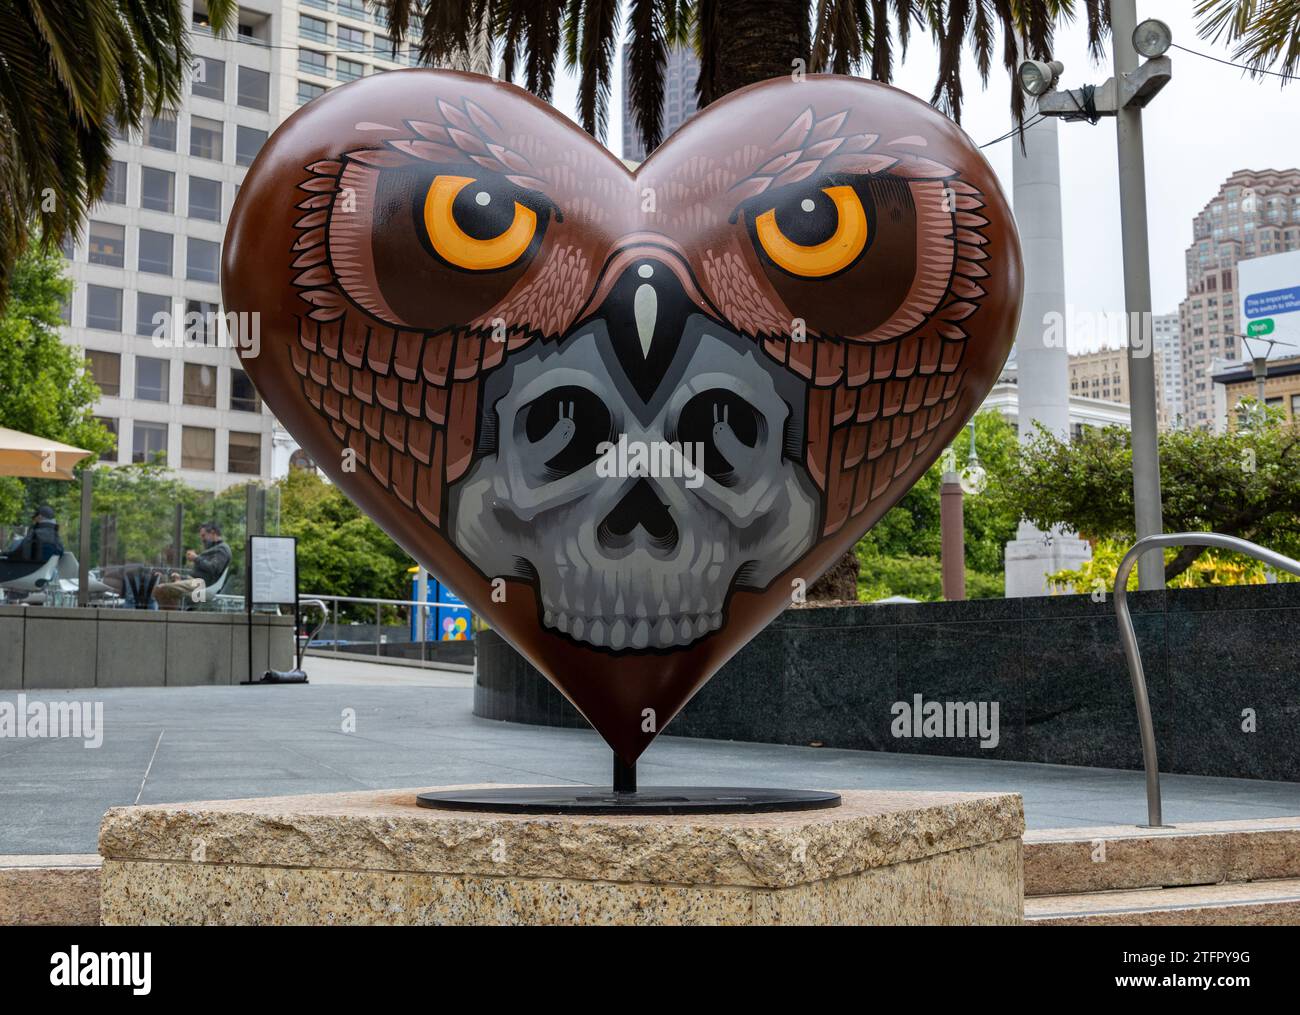 Annual Hearts in San Francisco Sculptures In Union Square San Francisco June 24, 2023 Heartfelt Wisdom by Jeremy Fish Stock Photo